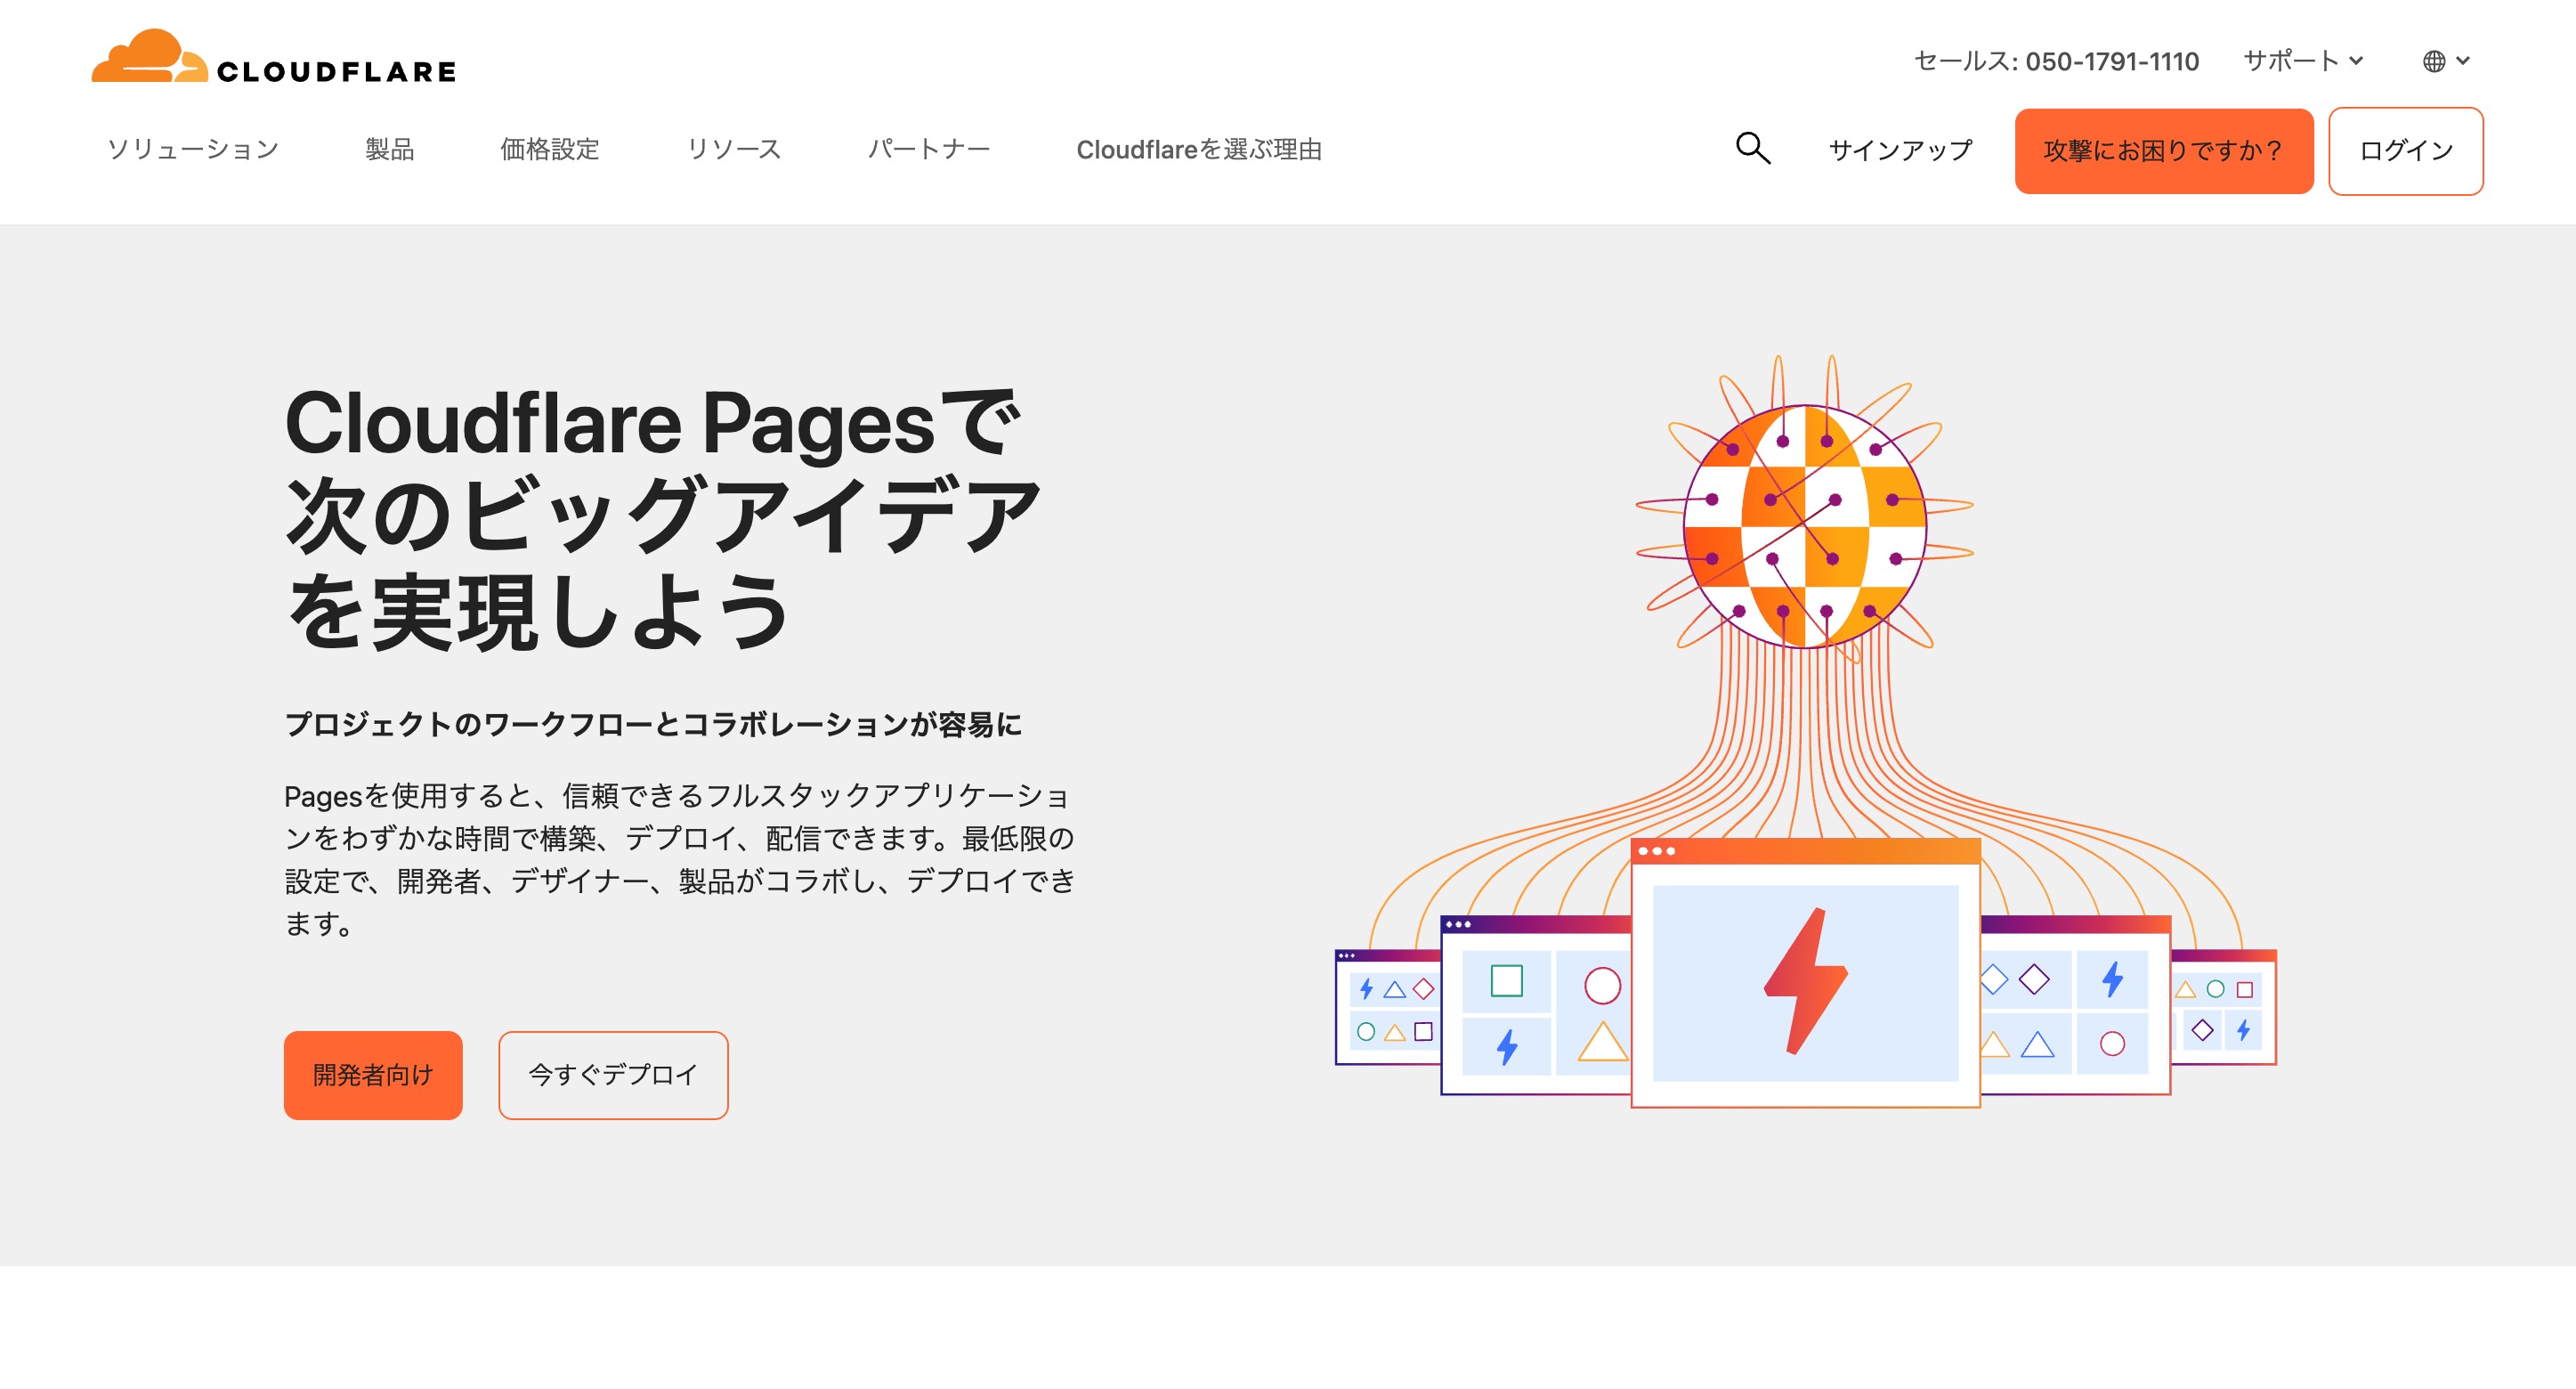 Cloudflare PagesのWebサイト